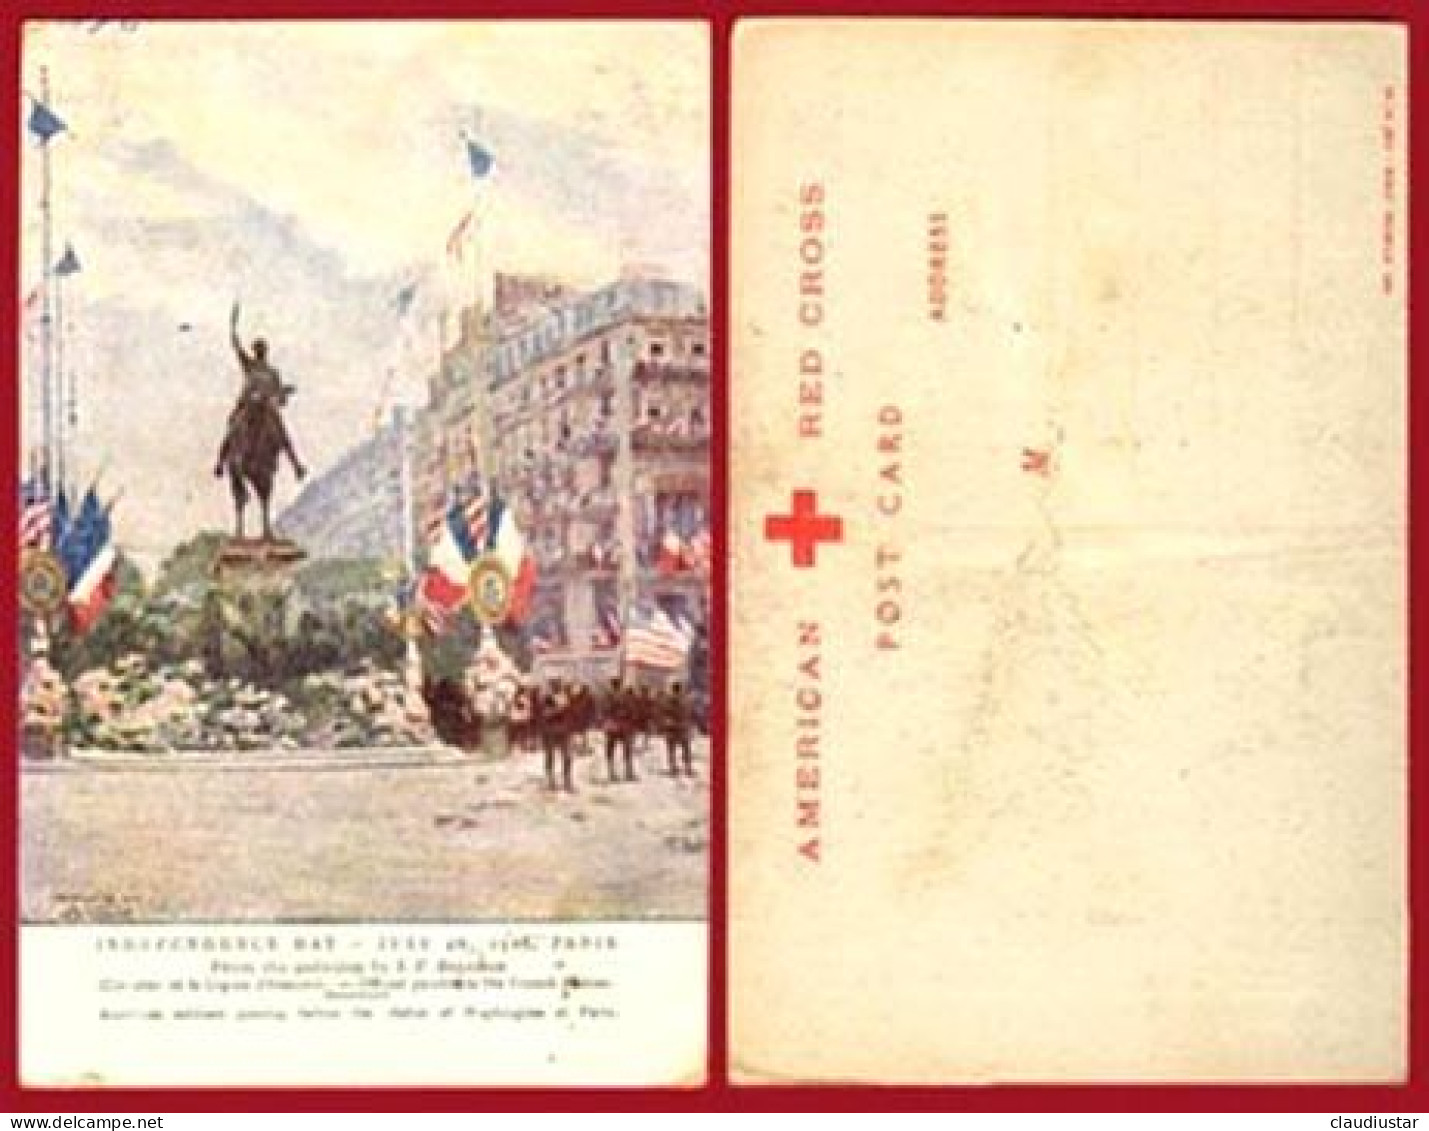 ** INDEPENDENCE  DAY -  4  JUILLET  1918  PARIS ** - Croce Rossa